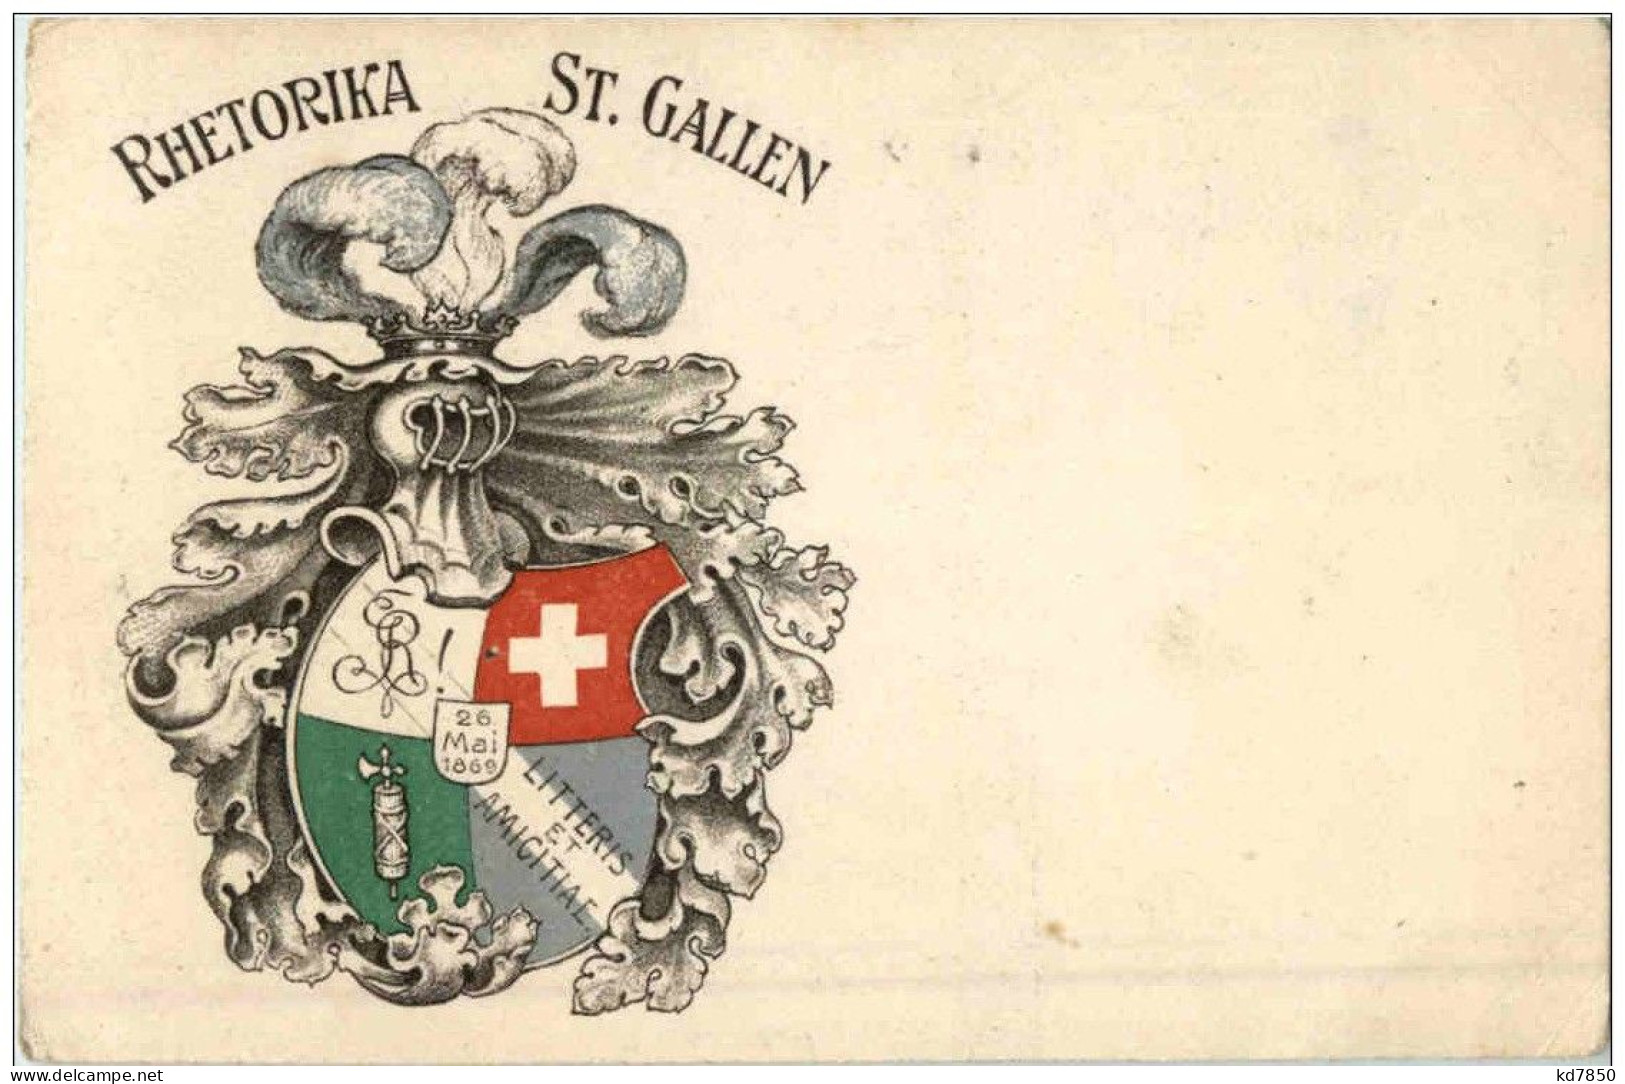 St. Gallen Rhetorika - Studentika - St. Gallen